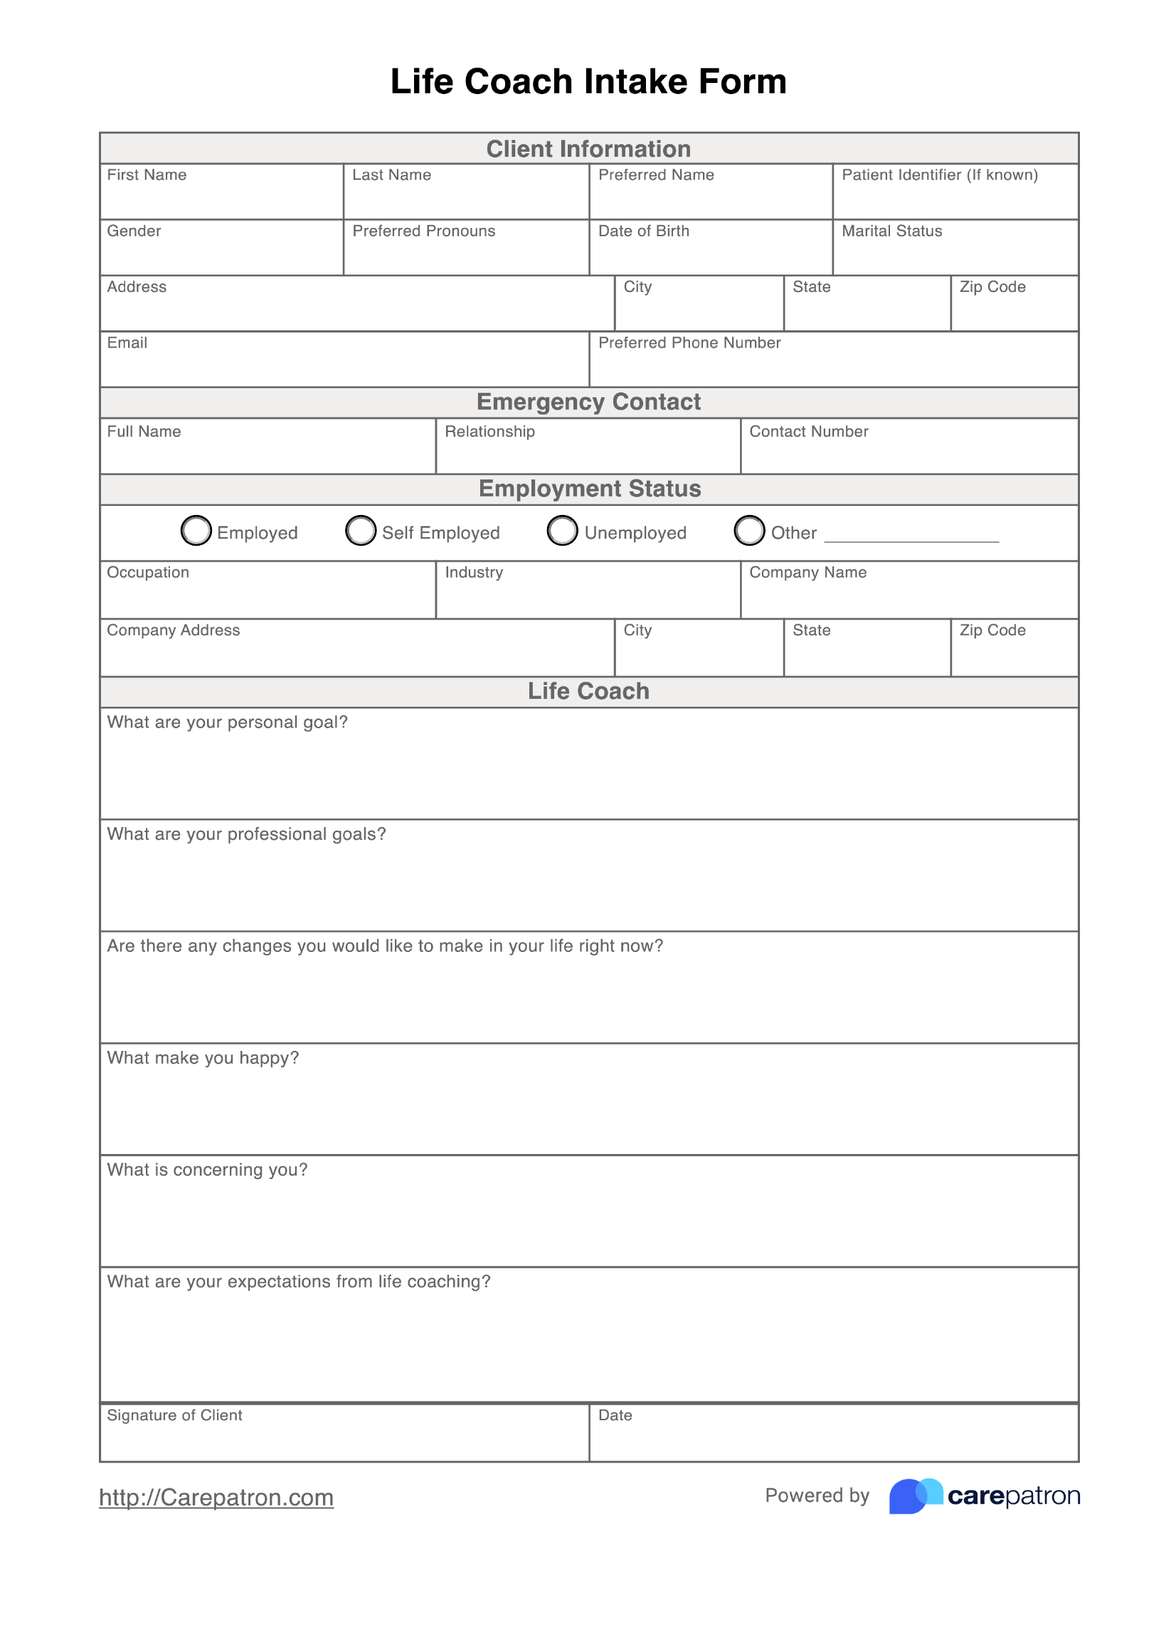 Life Coach Intake Form PDF Example